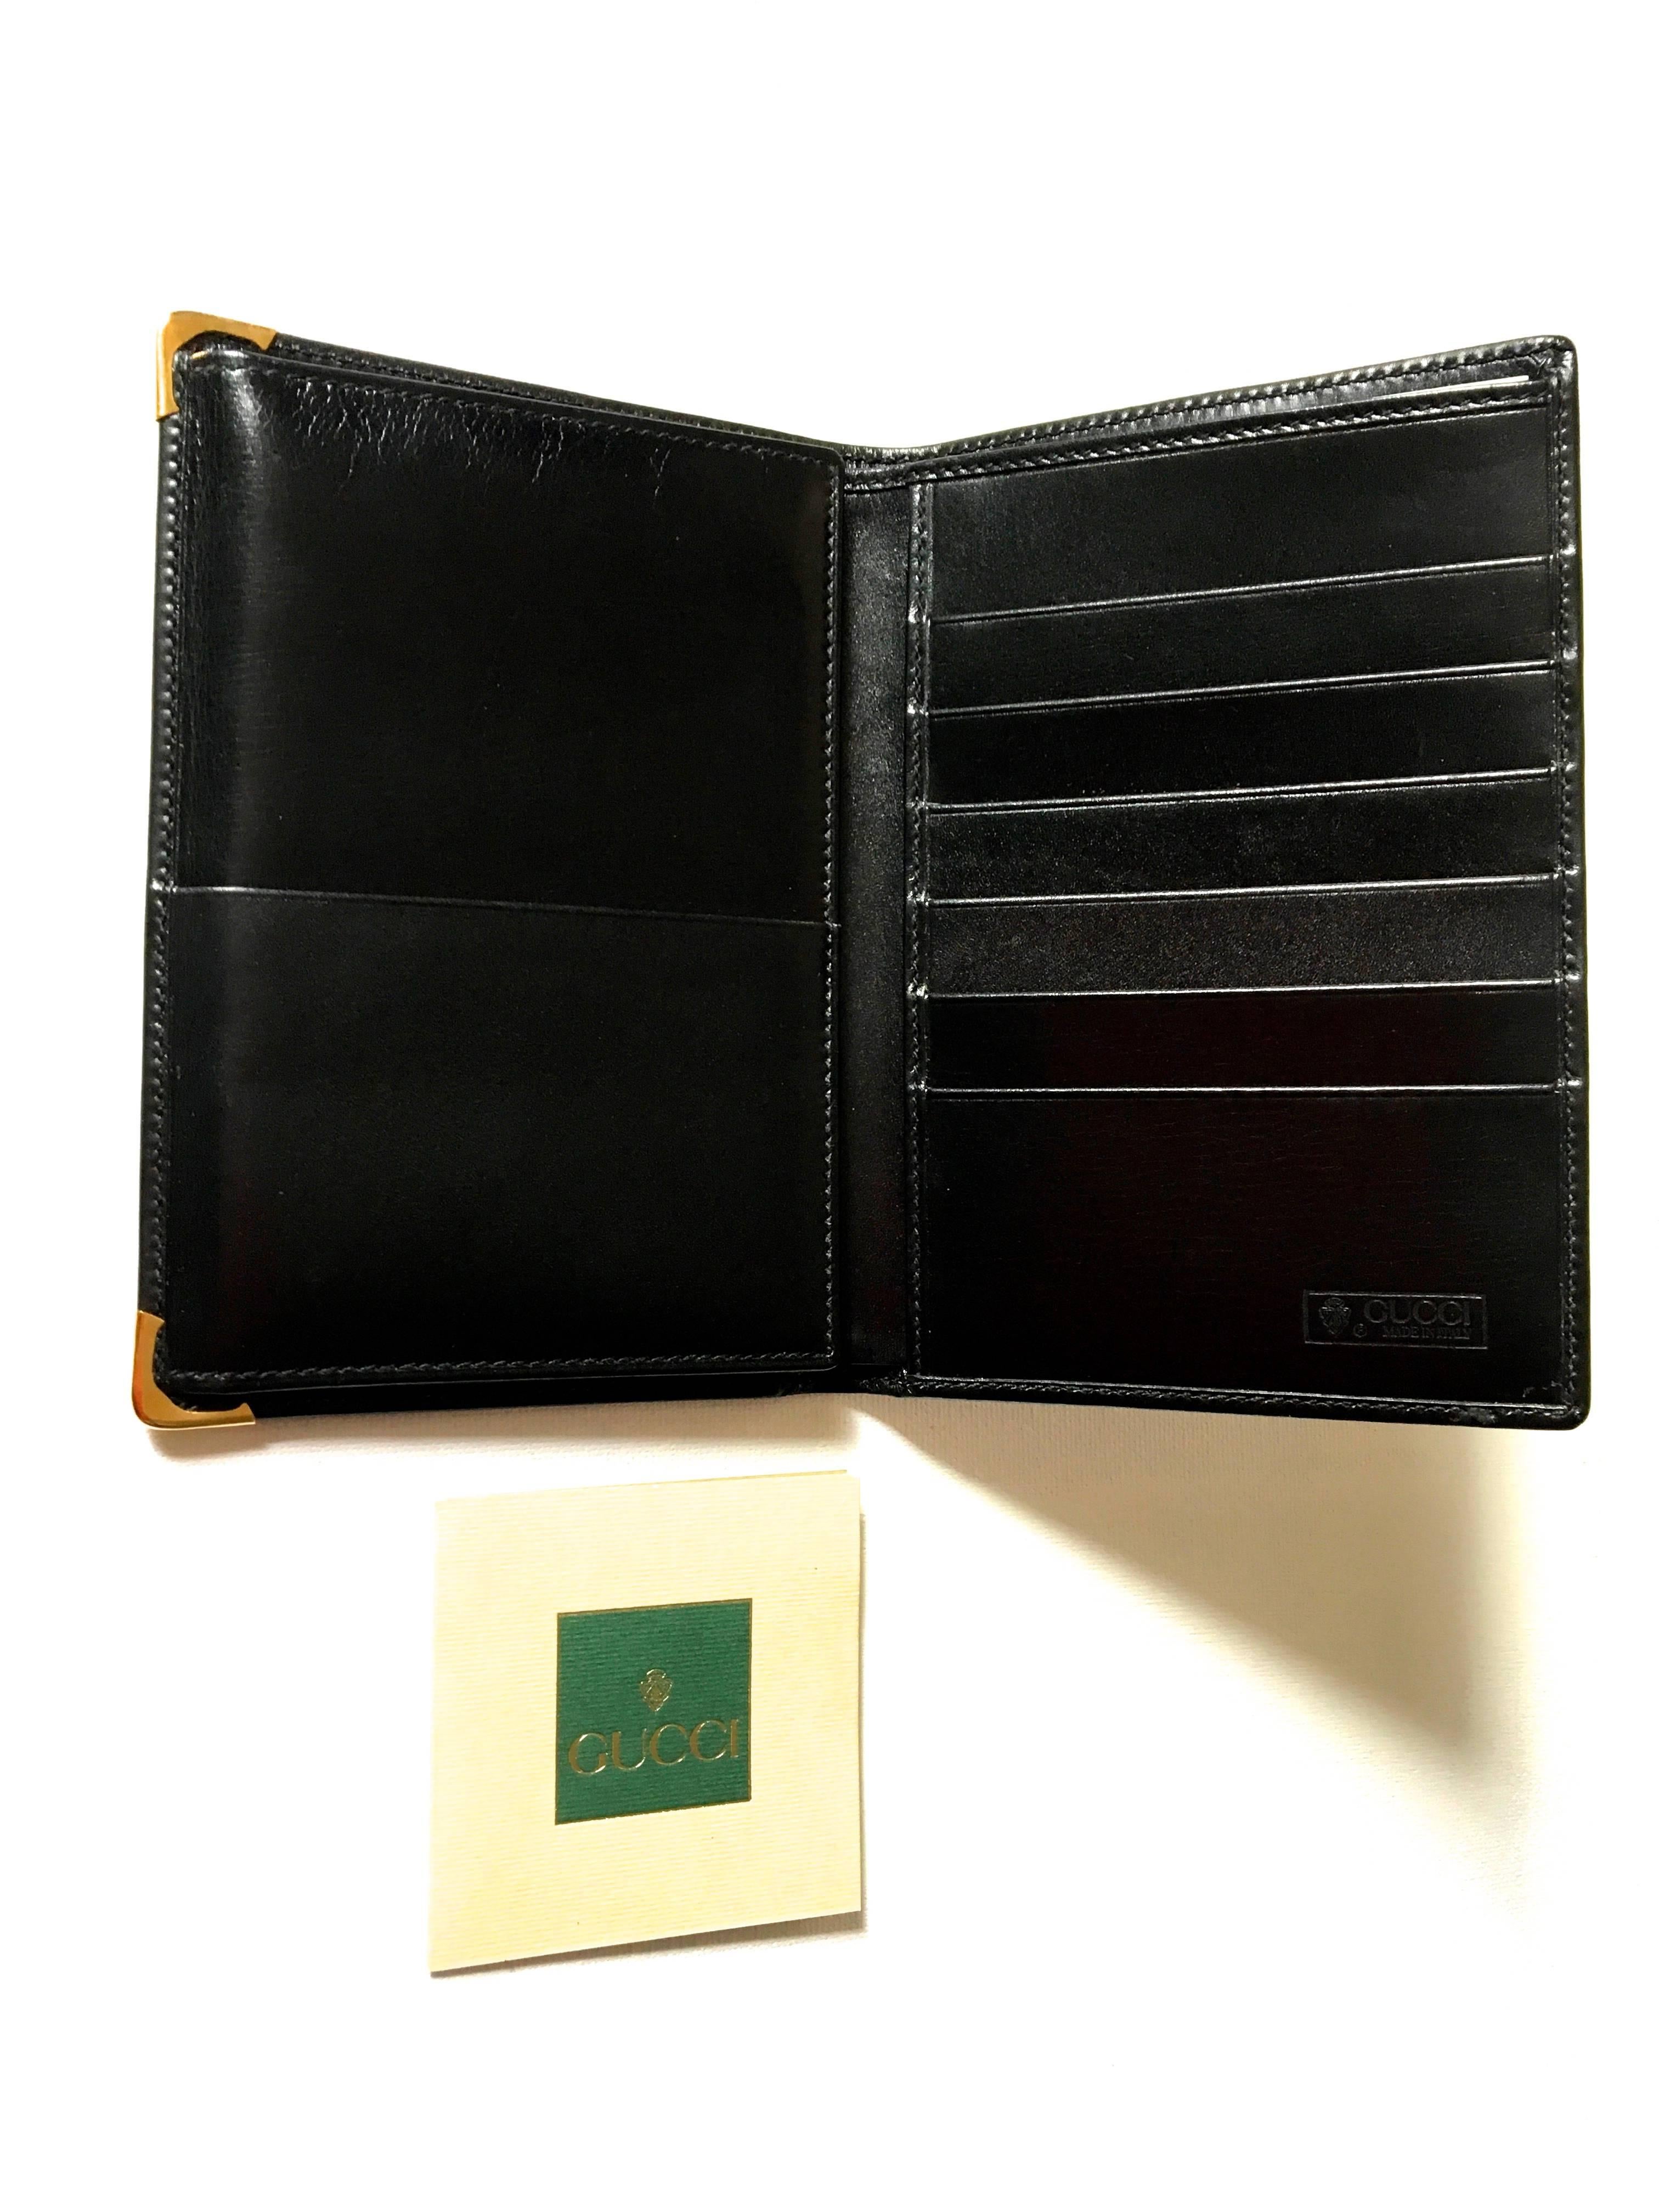 Vintage Gucci Leather Cigar Case - Mint Condition 1